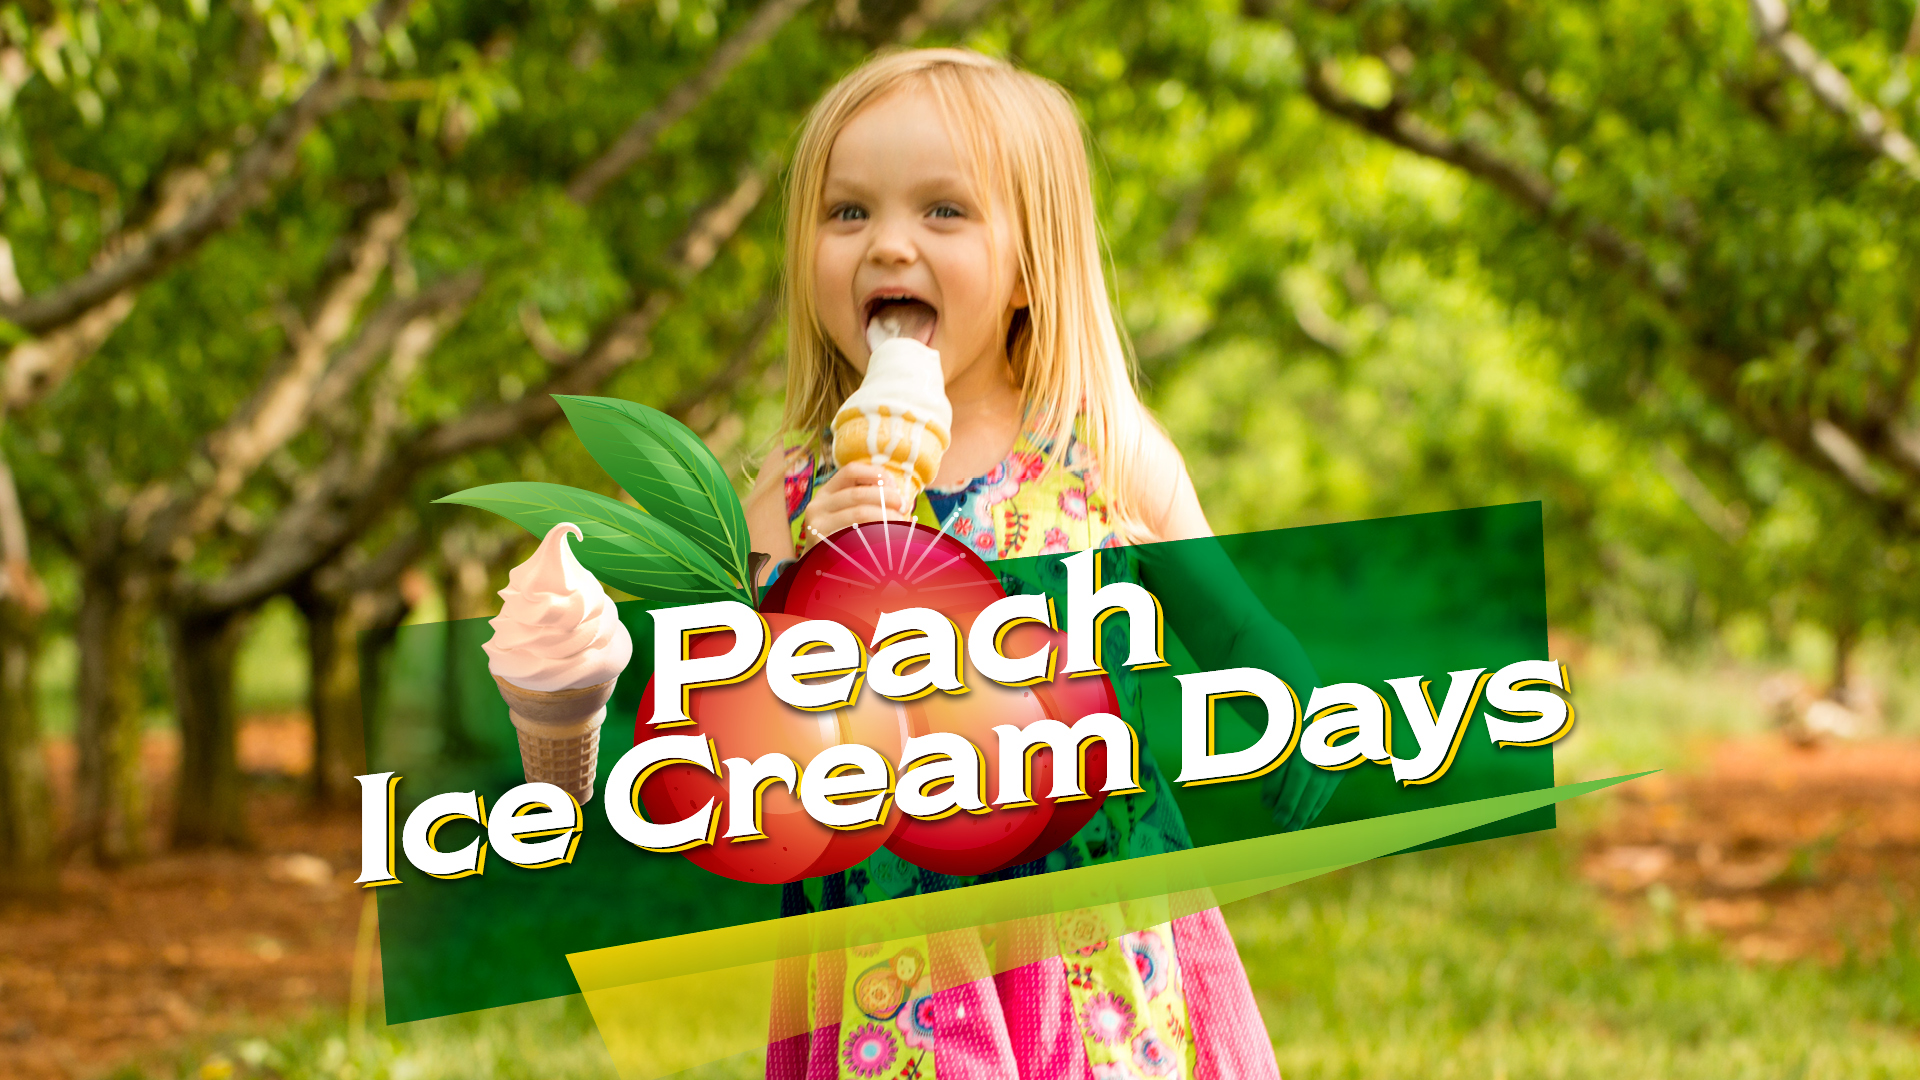 Homemade Peach Ice Cream Days event in Crozet